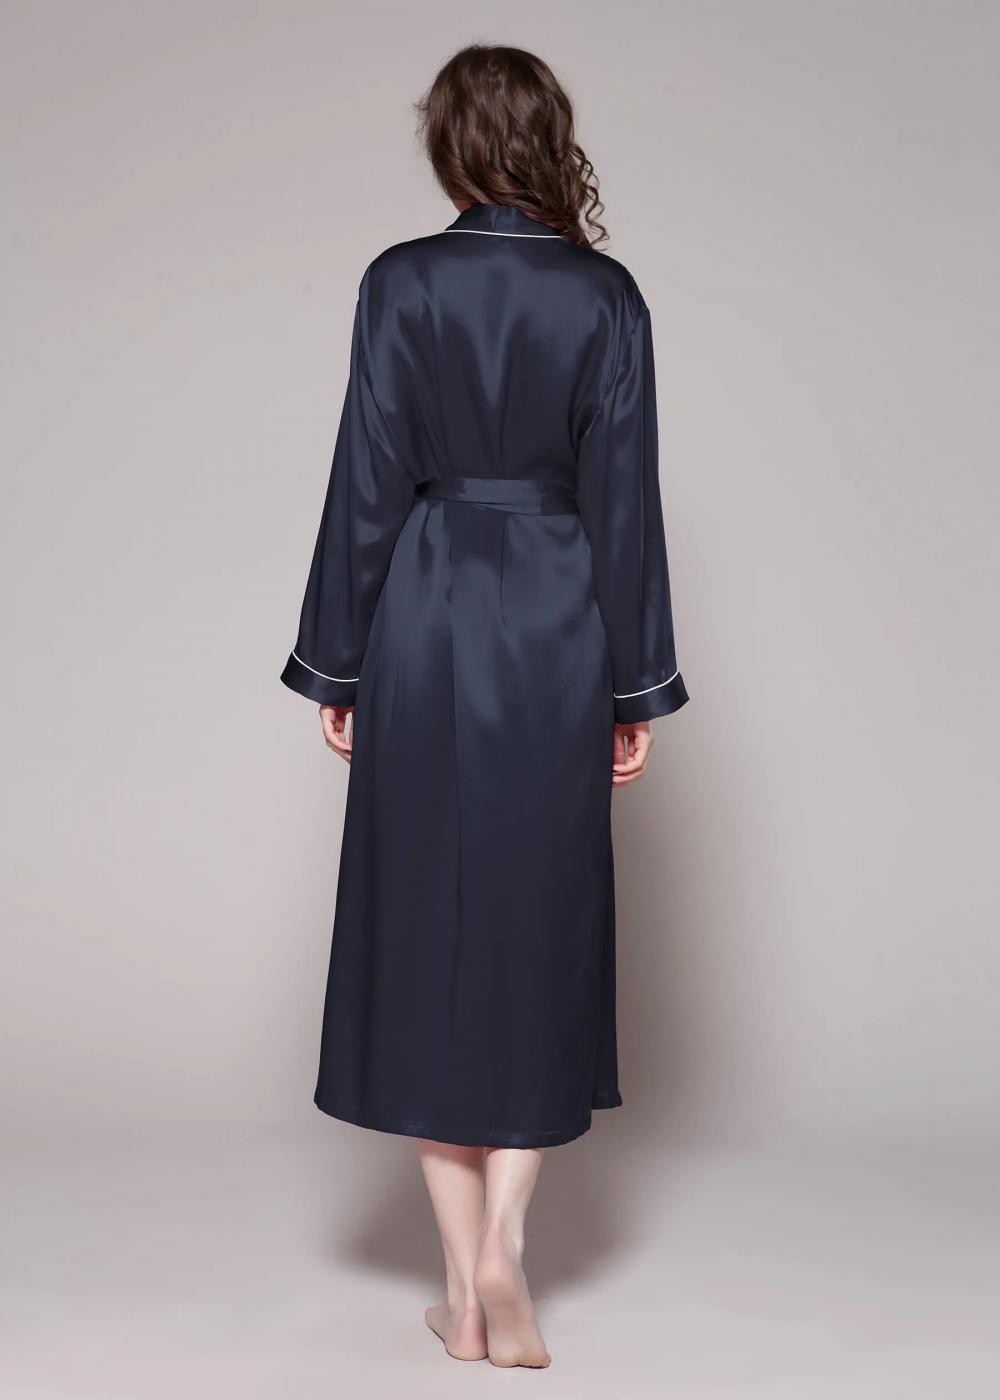 19 Momme Contra Trim And Full Length Women's Silk Robe Silky Kimono Bathrobe for Bride Bridesmaids Wedding Party Loungewear Long